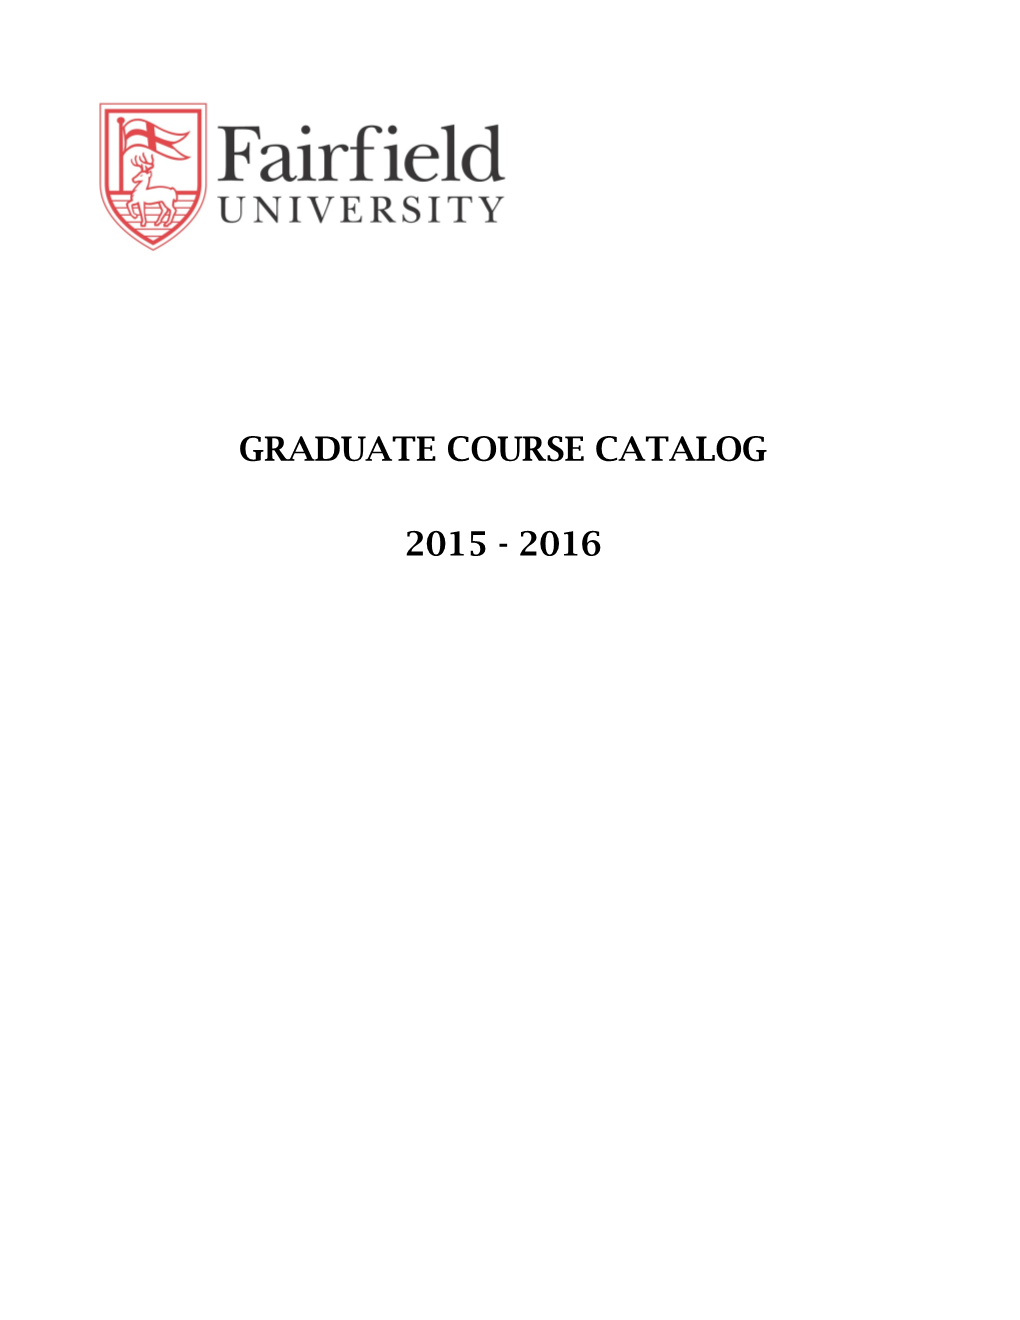 Graduate Course Catalog 2015